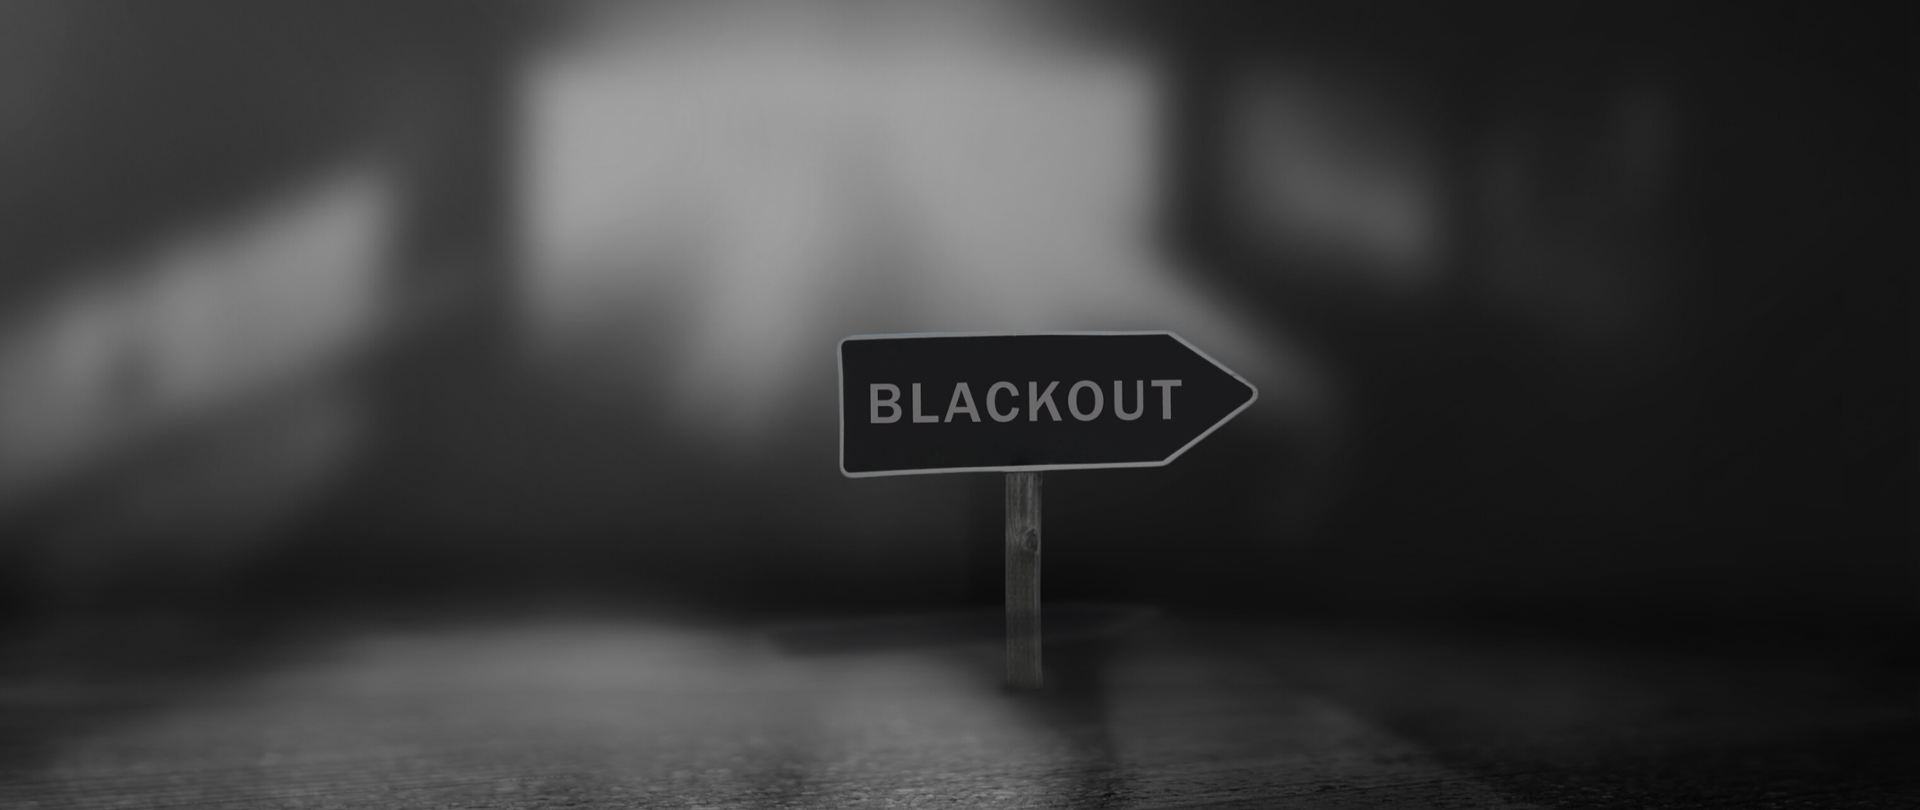 Drogowskaz z napisem "Blackout"